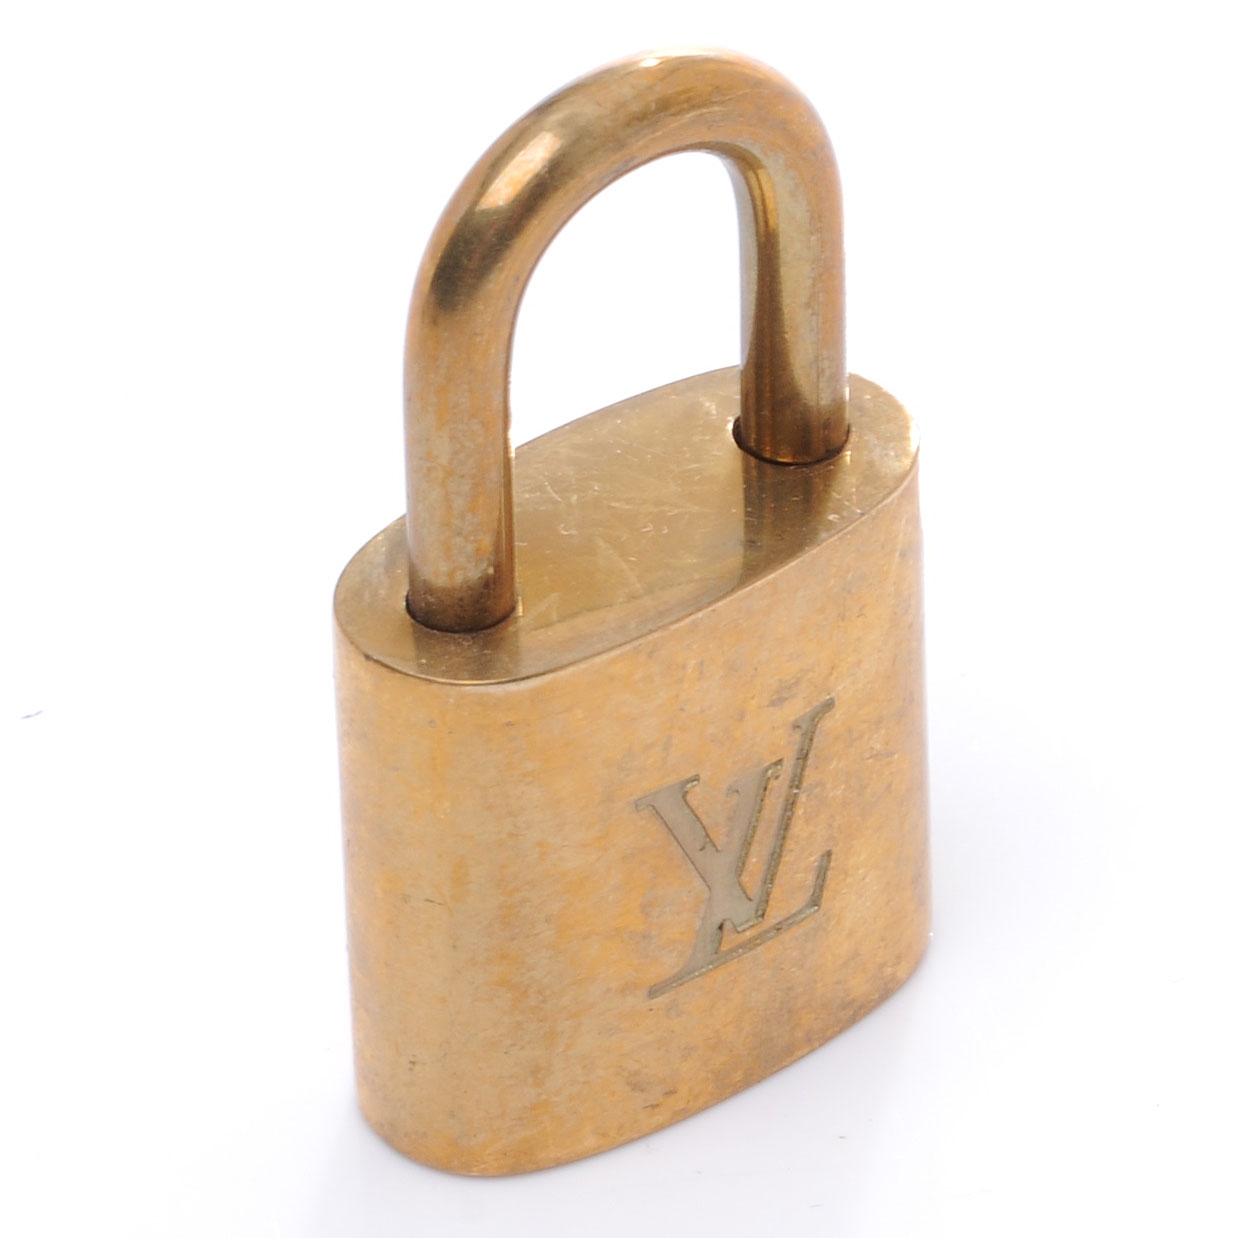 LOUIS VUITTON Brass Lock and Key Set #435 60086